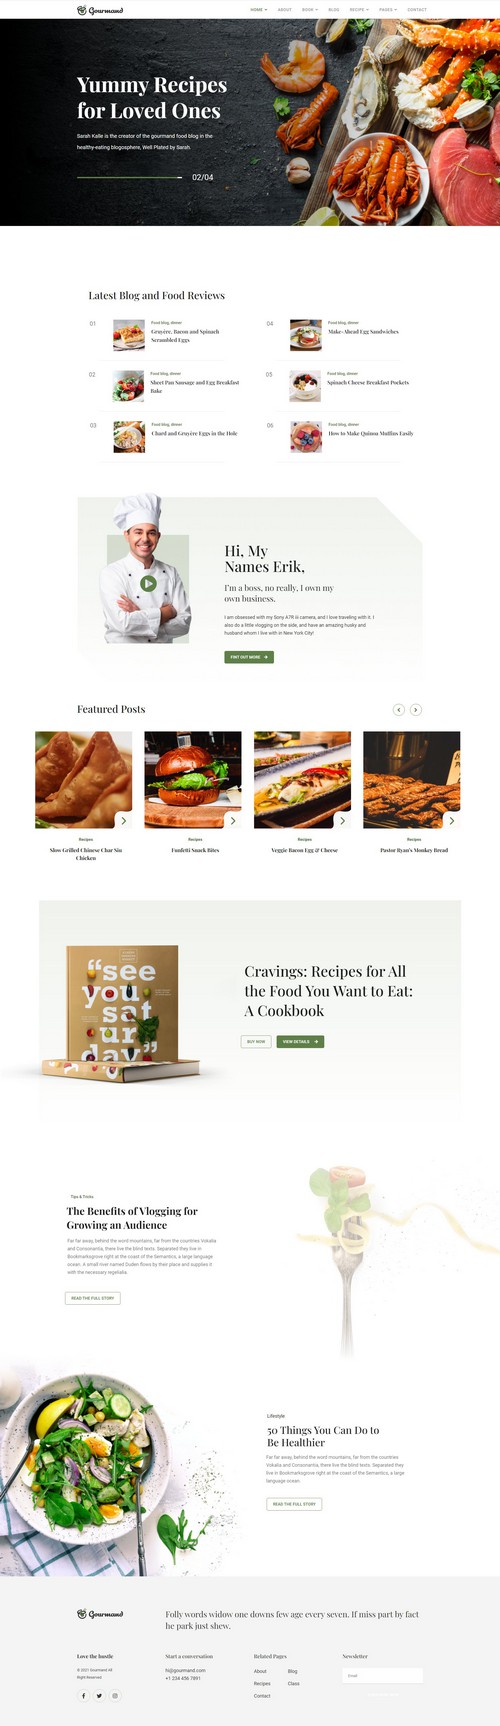 Gourmand - Recipe and Food Blog Websites Joomla Template